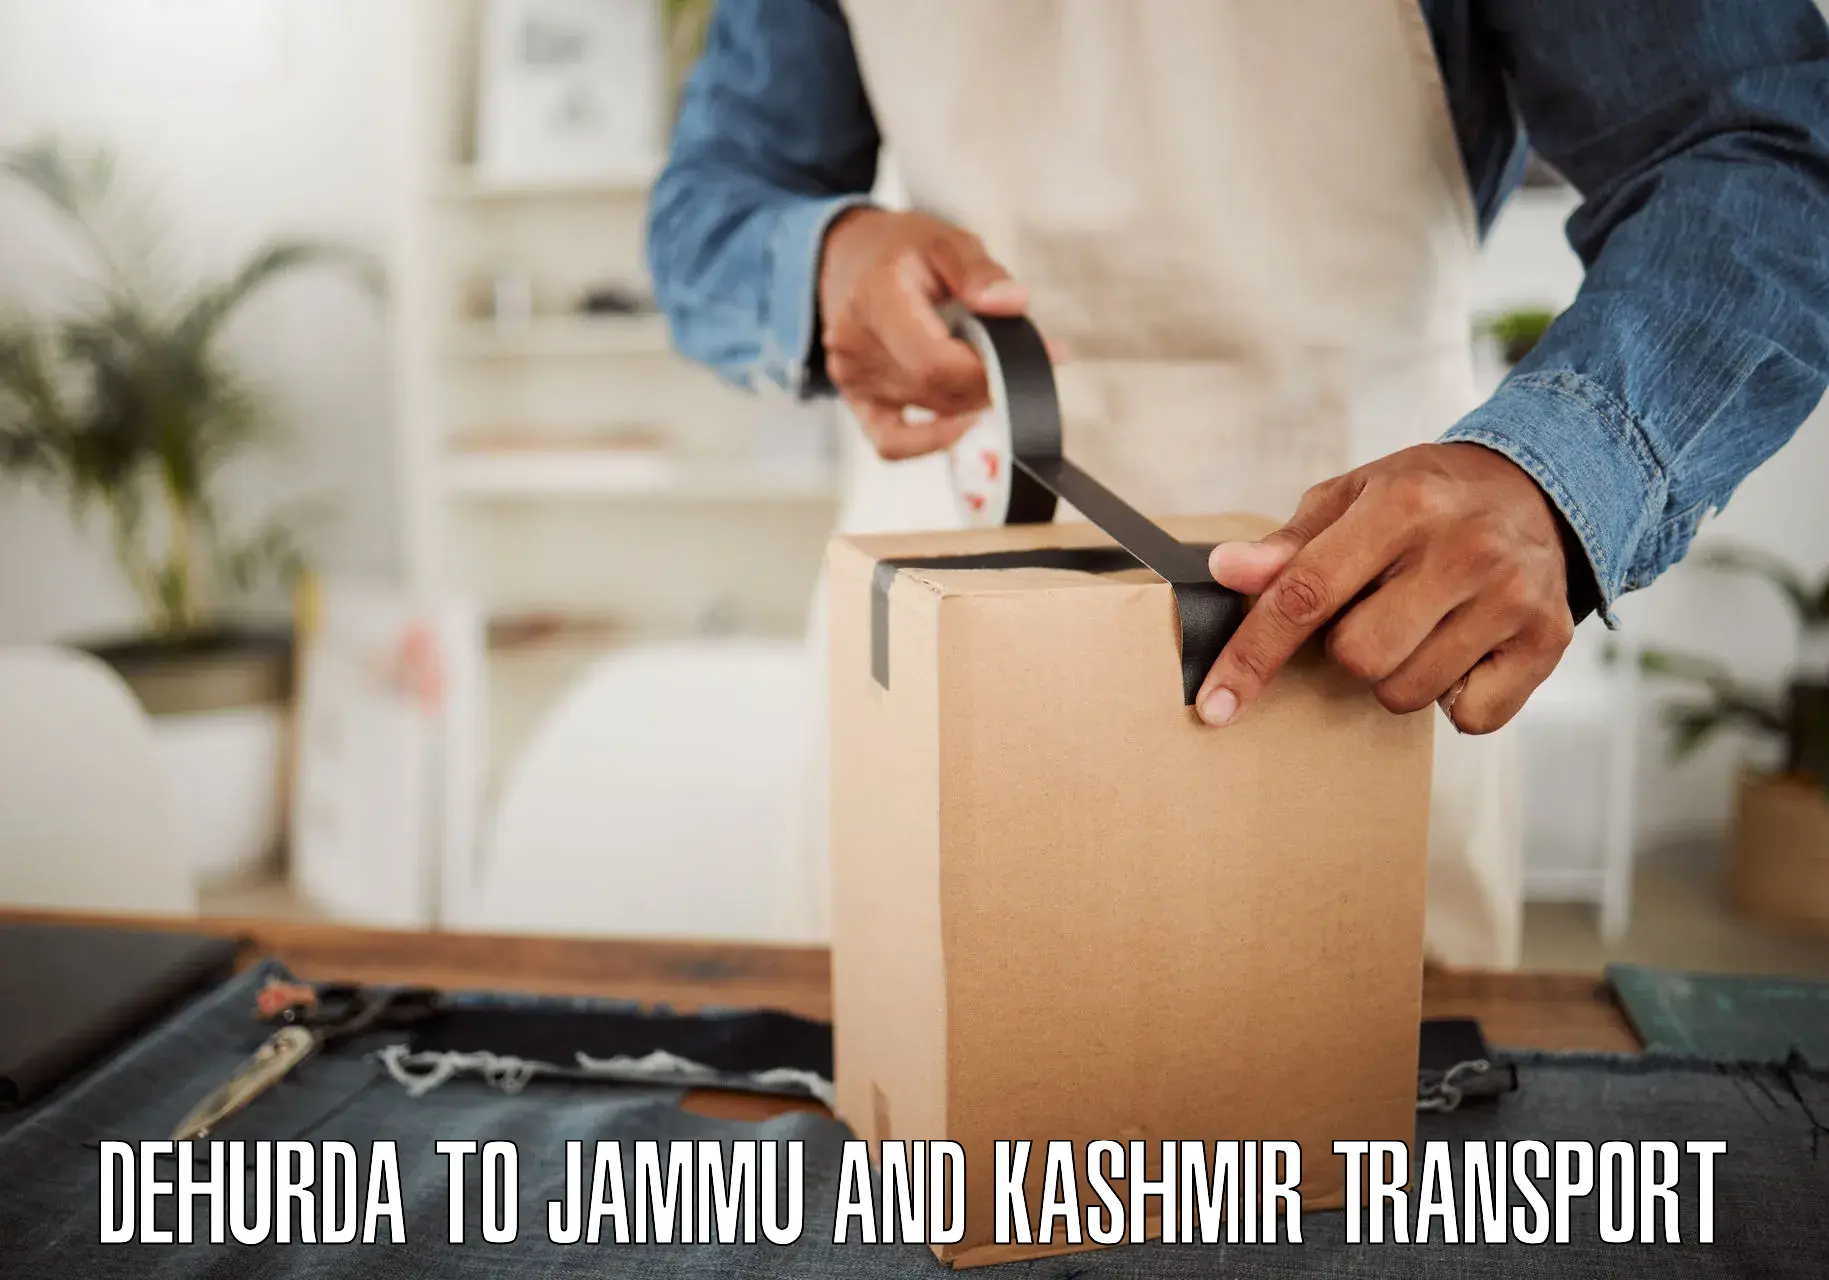 Furniture transport service Dehurda to Jammu